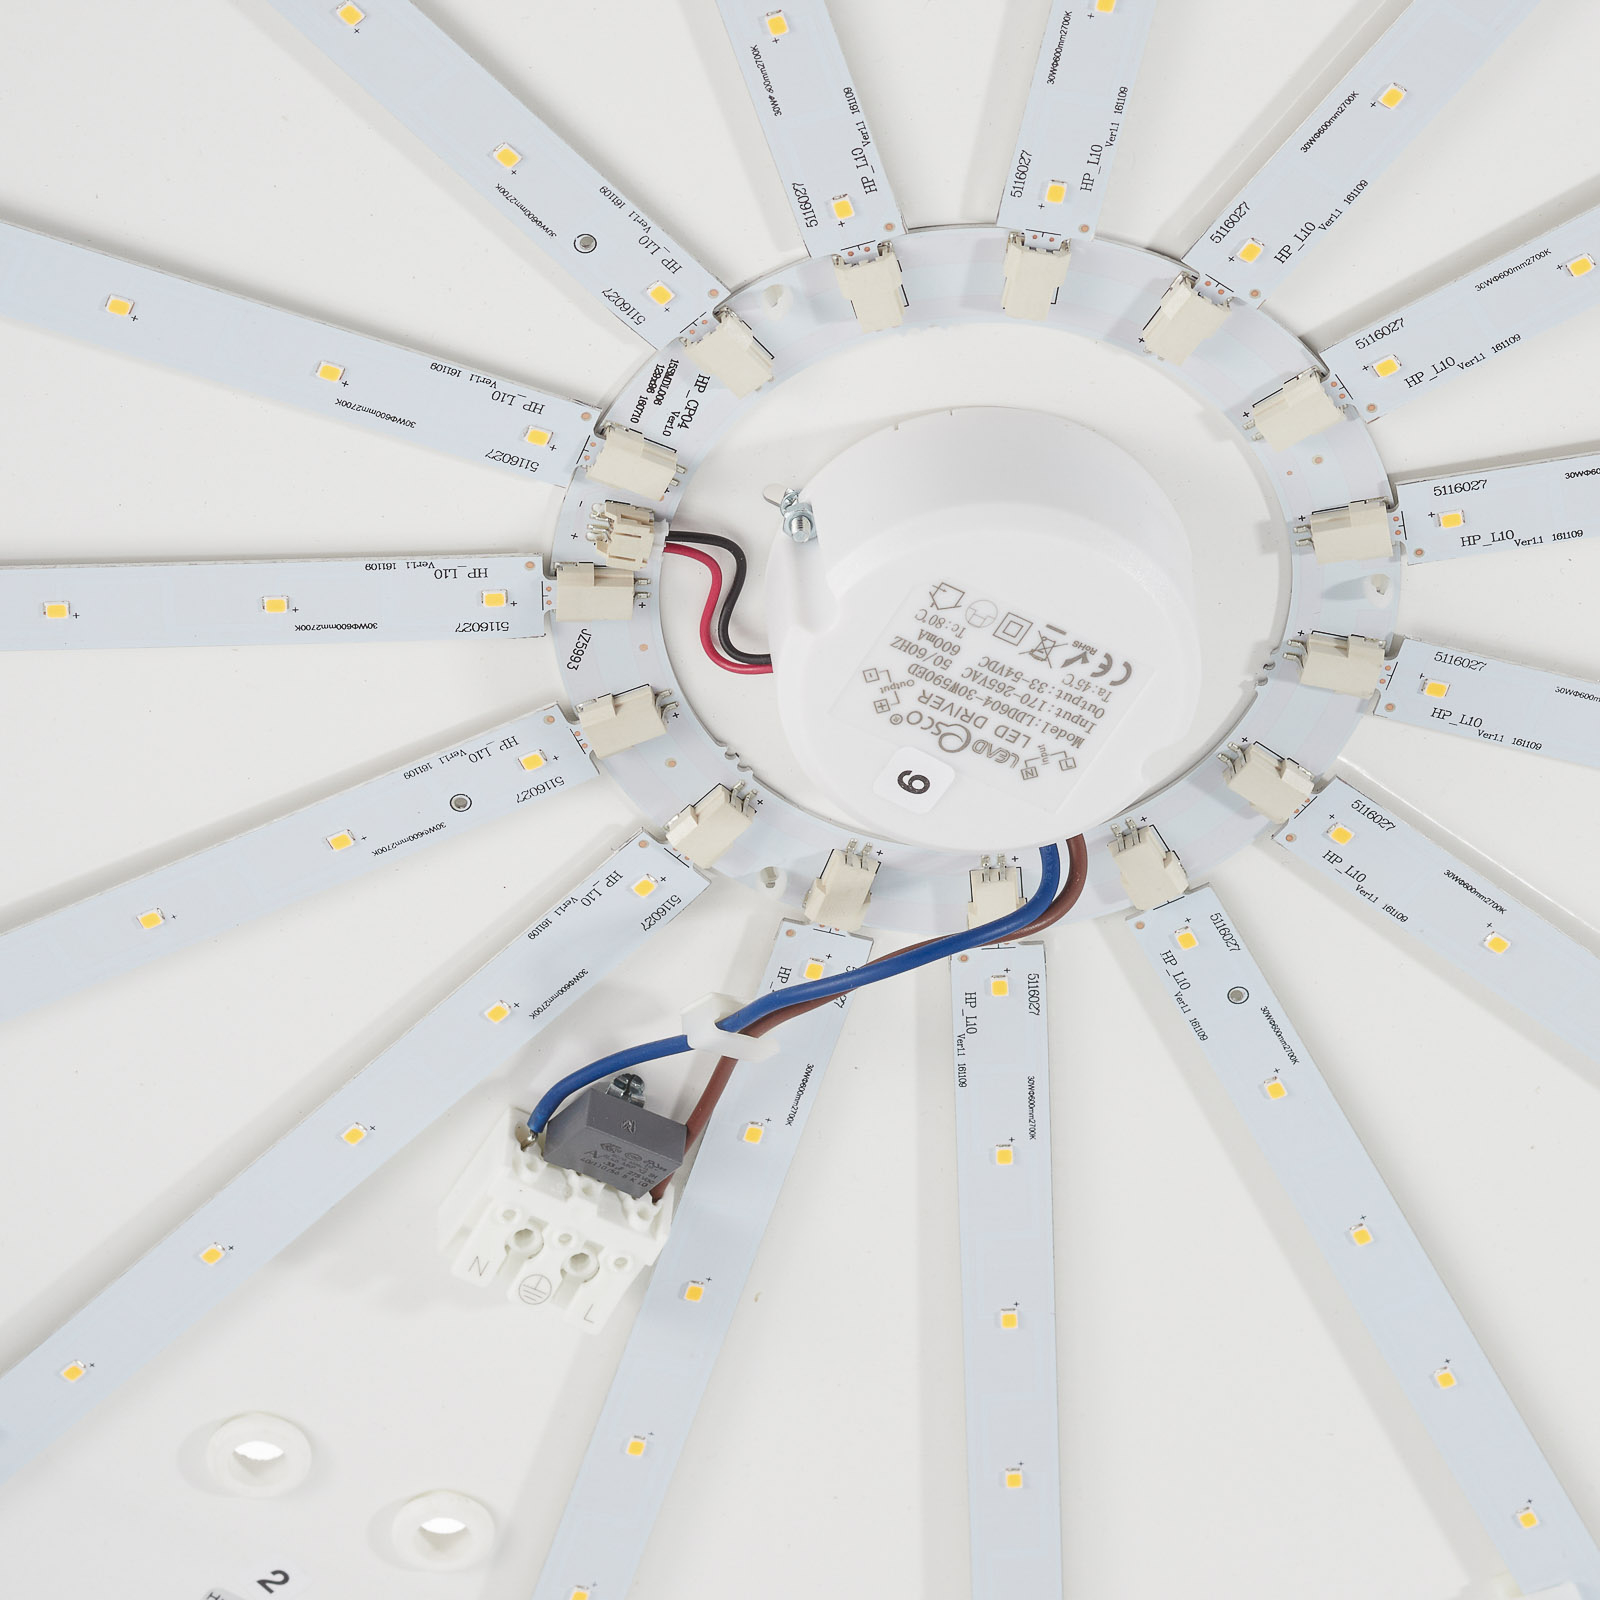 Aurelia - stmievateľná LED stropná lampa